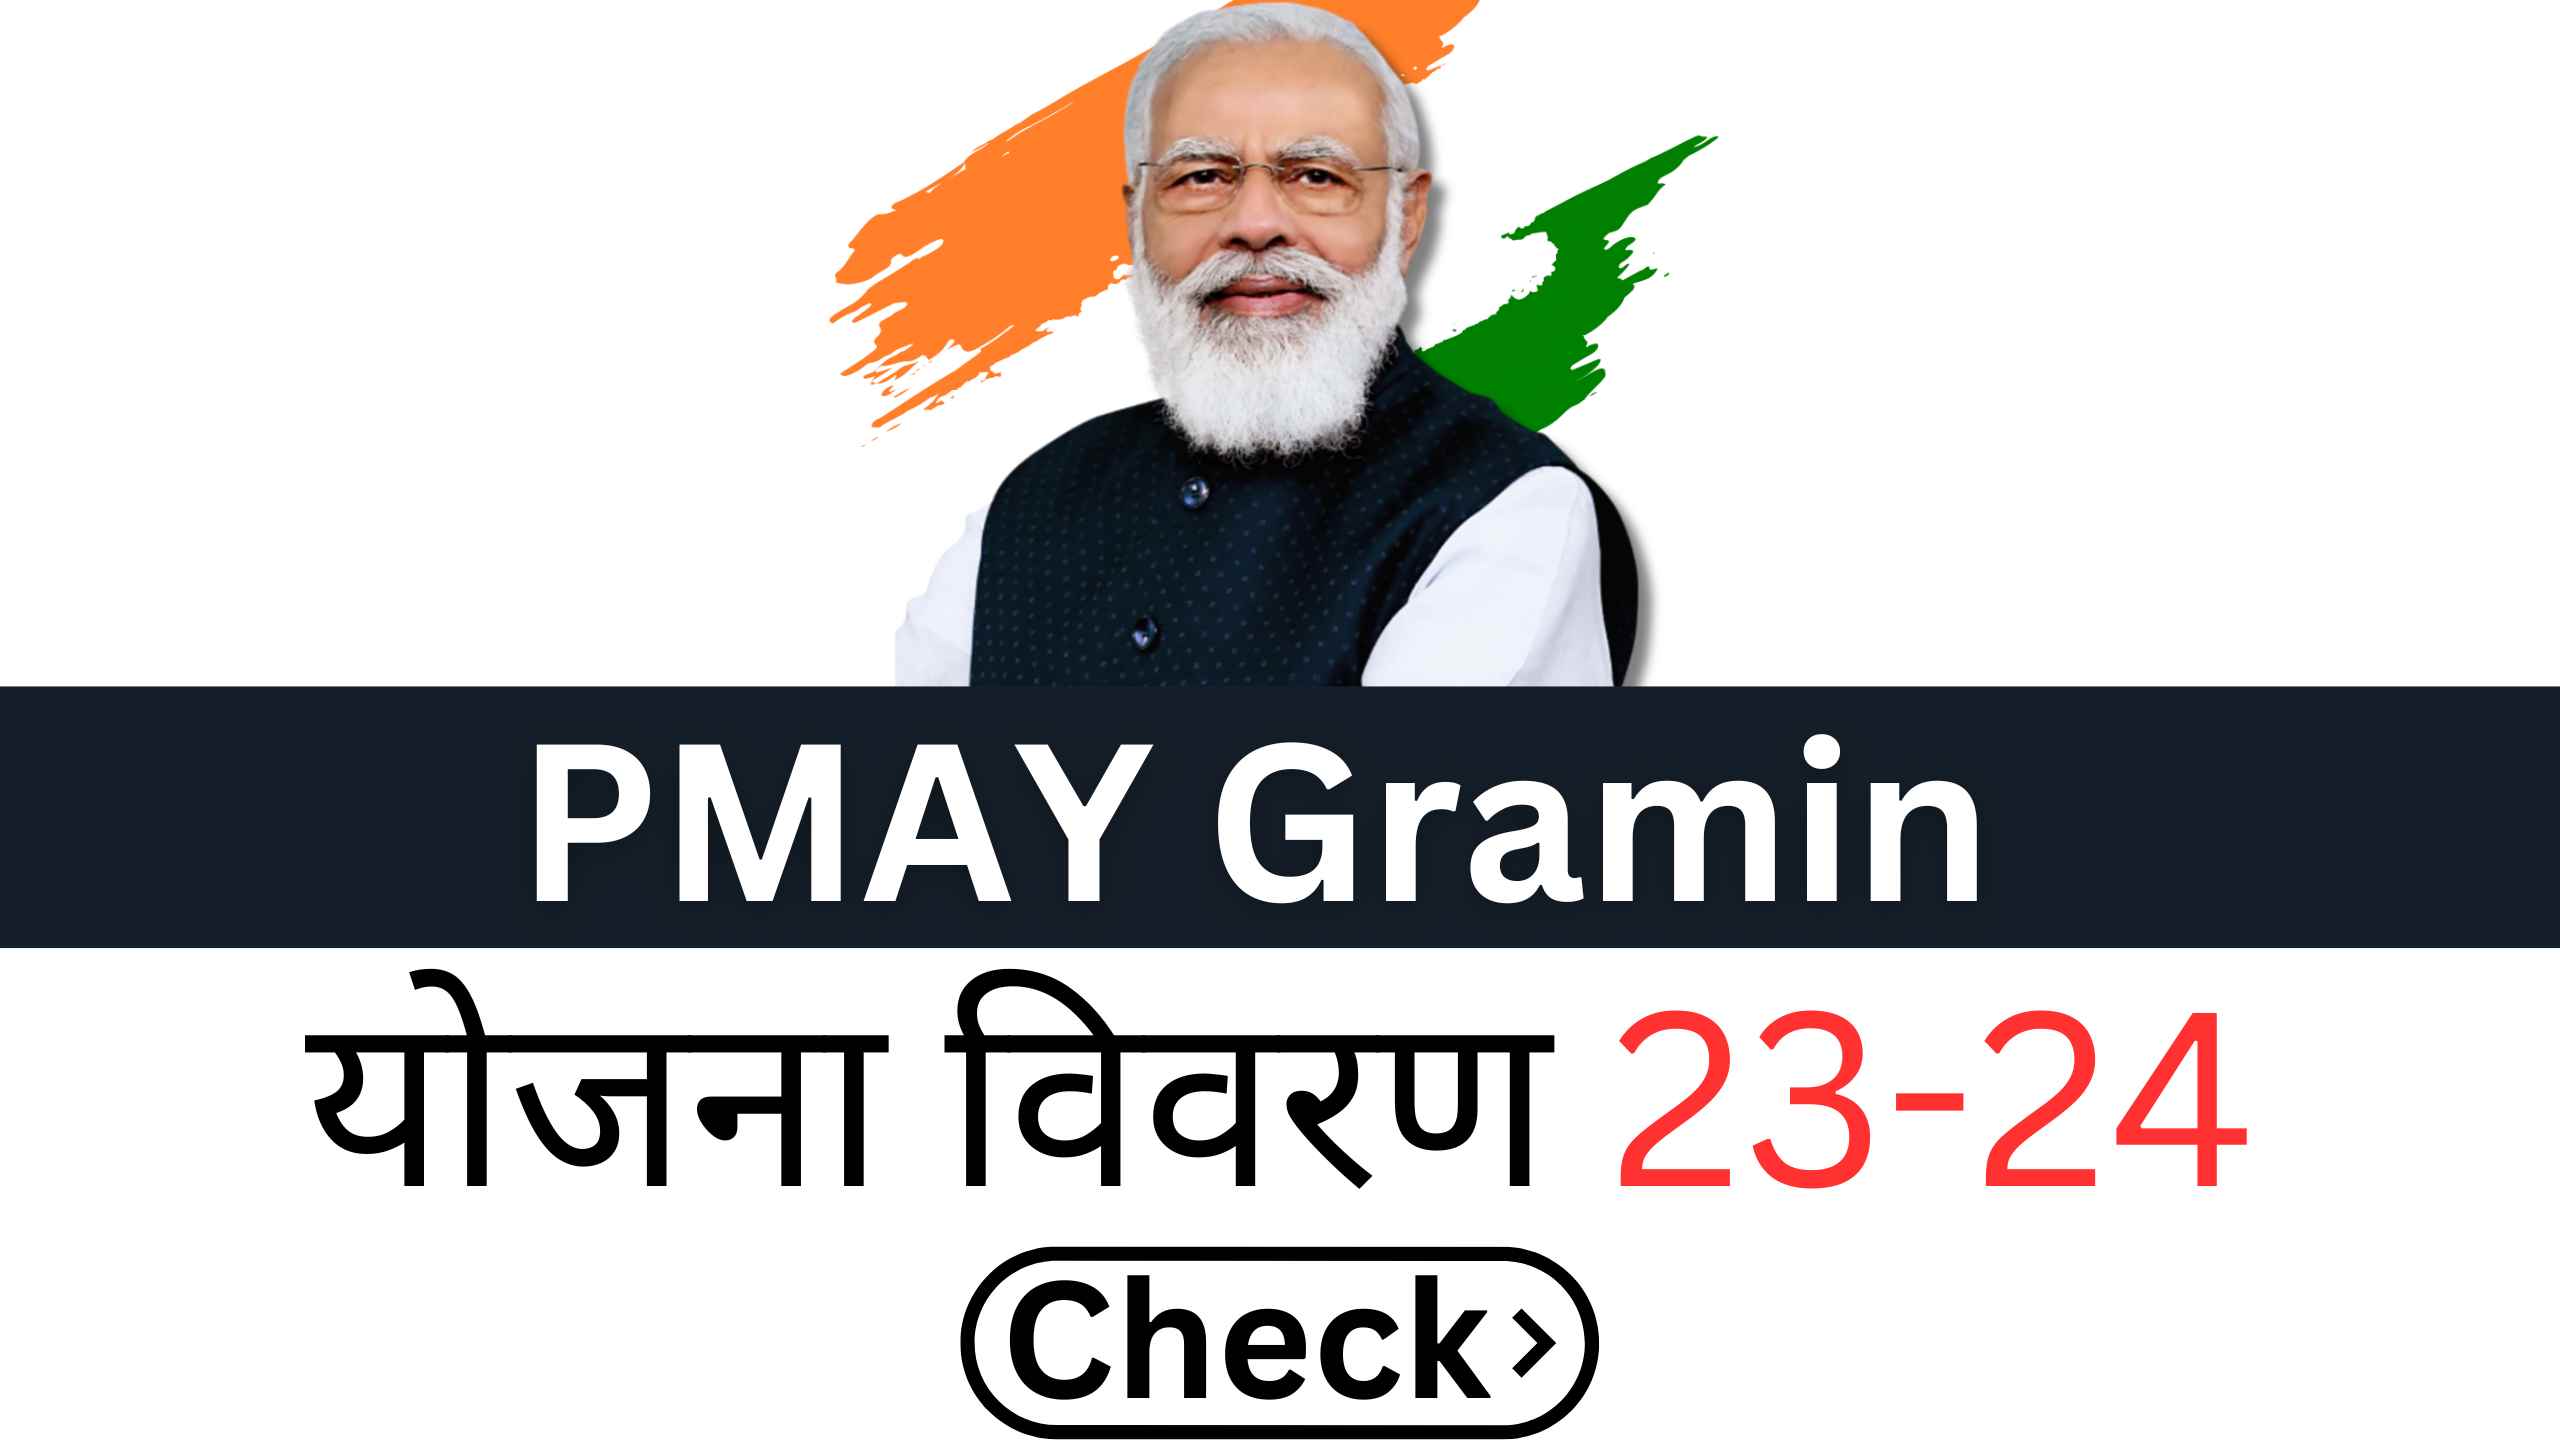 PMAY Gramin scheme details 2023-24